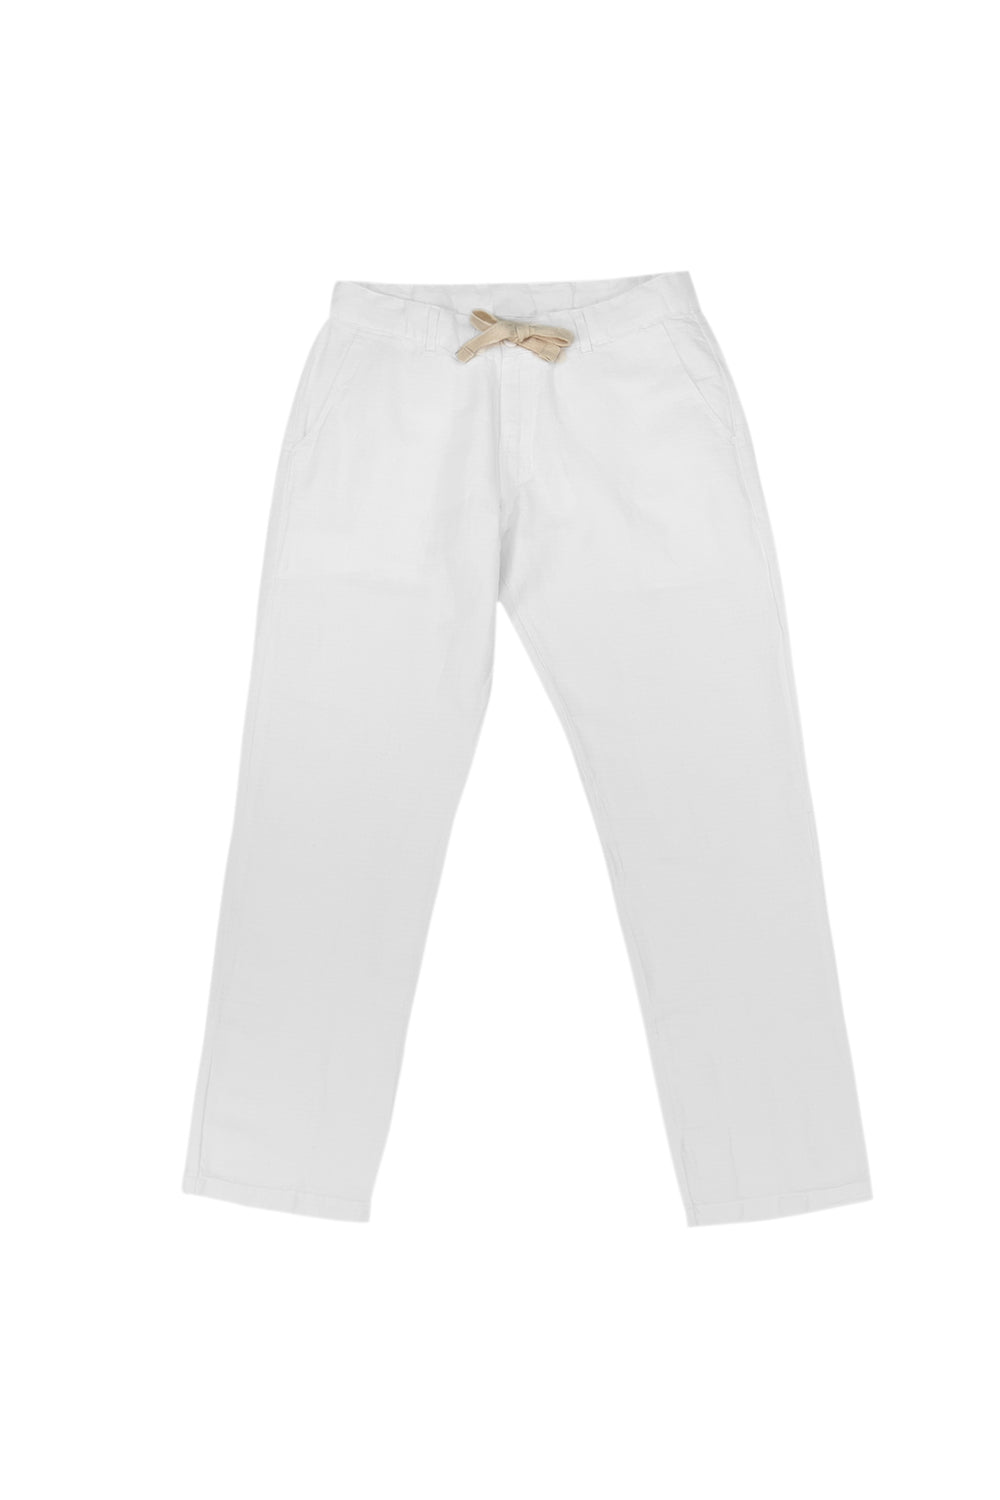 Cotton Cargo Pants - White - Kids | H&M US